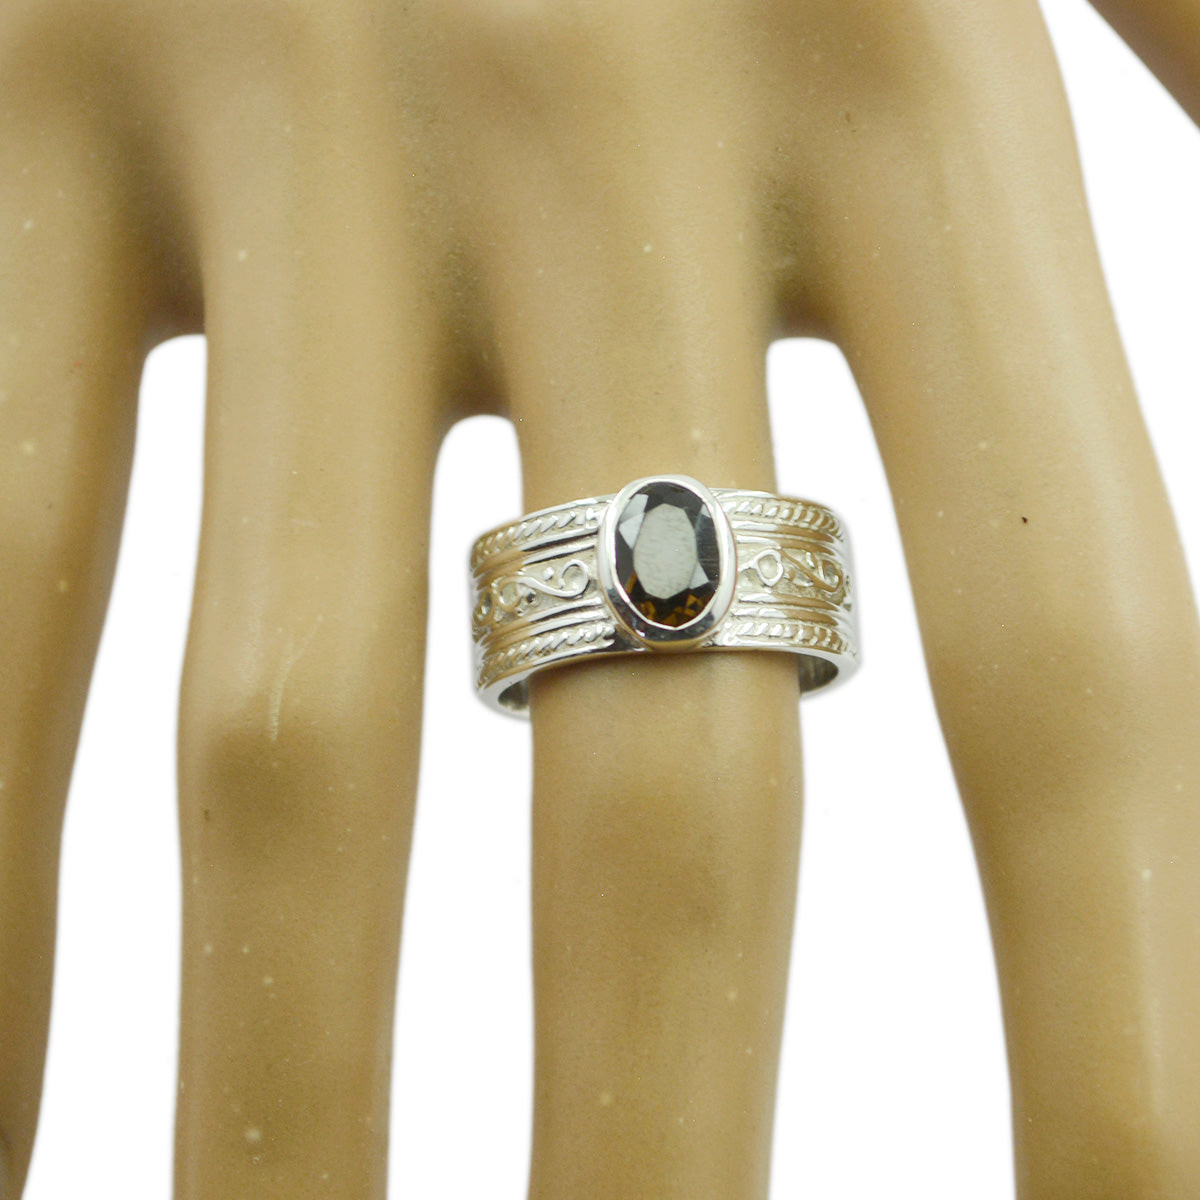 Very Nice Stone Smoky Quartz Sterling Silver Ring Jewelry Holder